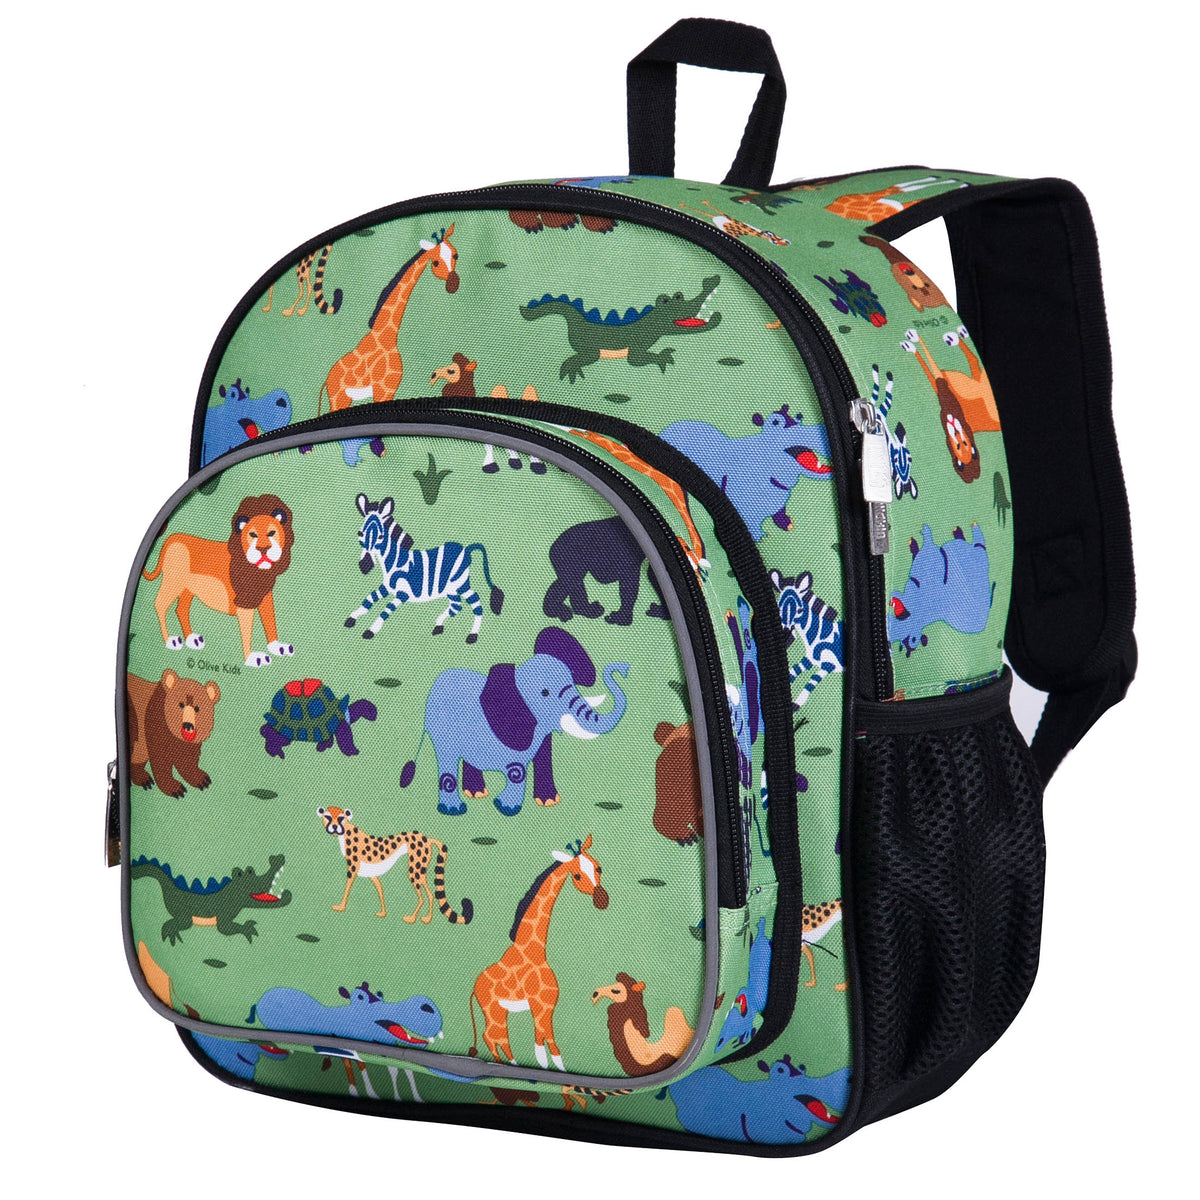 Wildkin 12 Inch Kids Backpack | Toddler Backpacks - Wild Animals